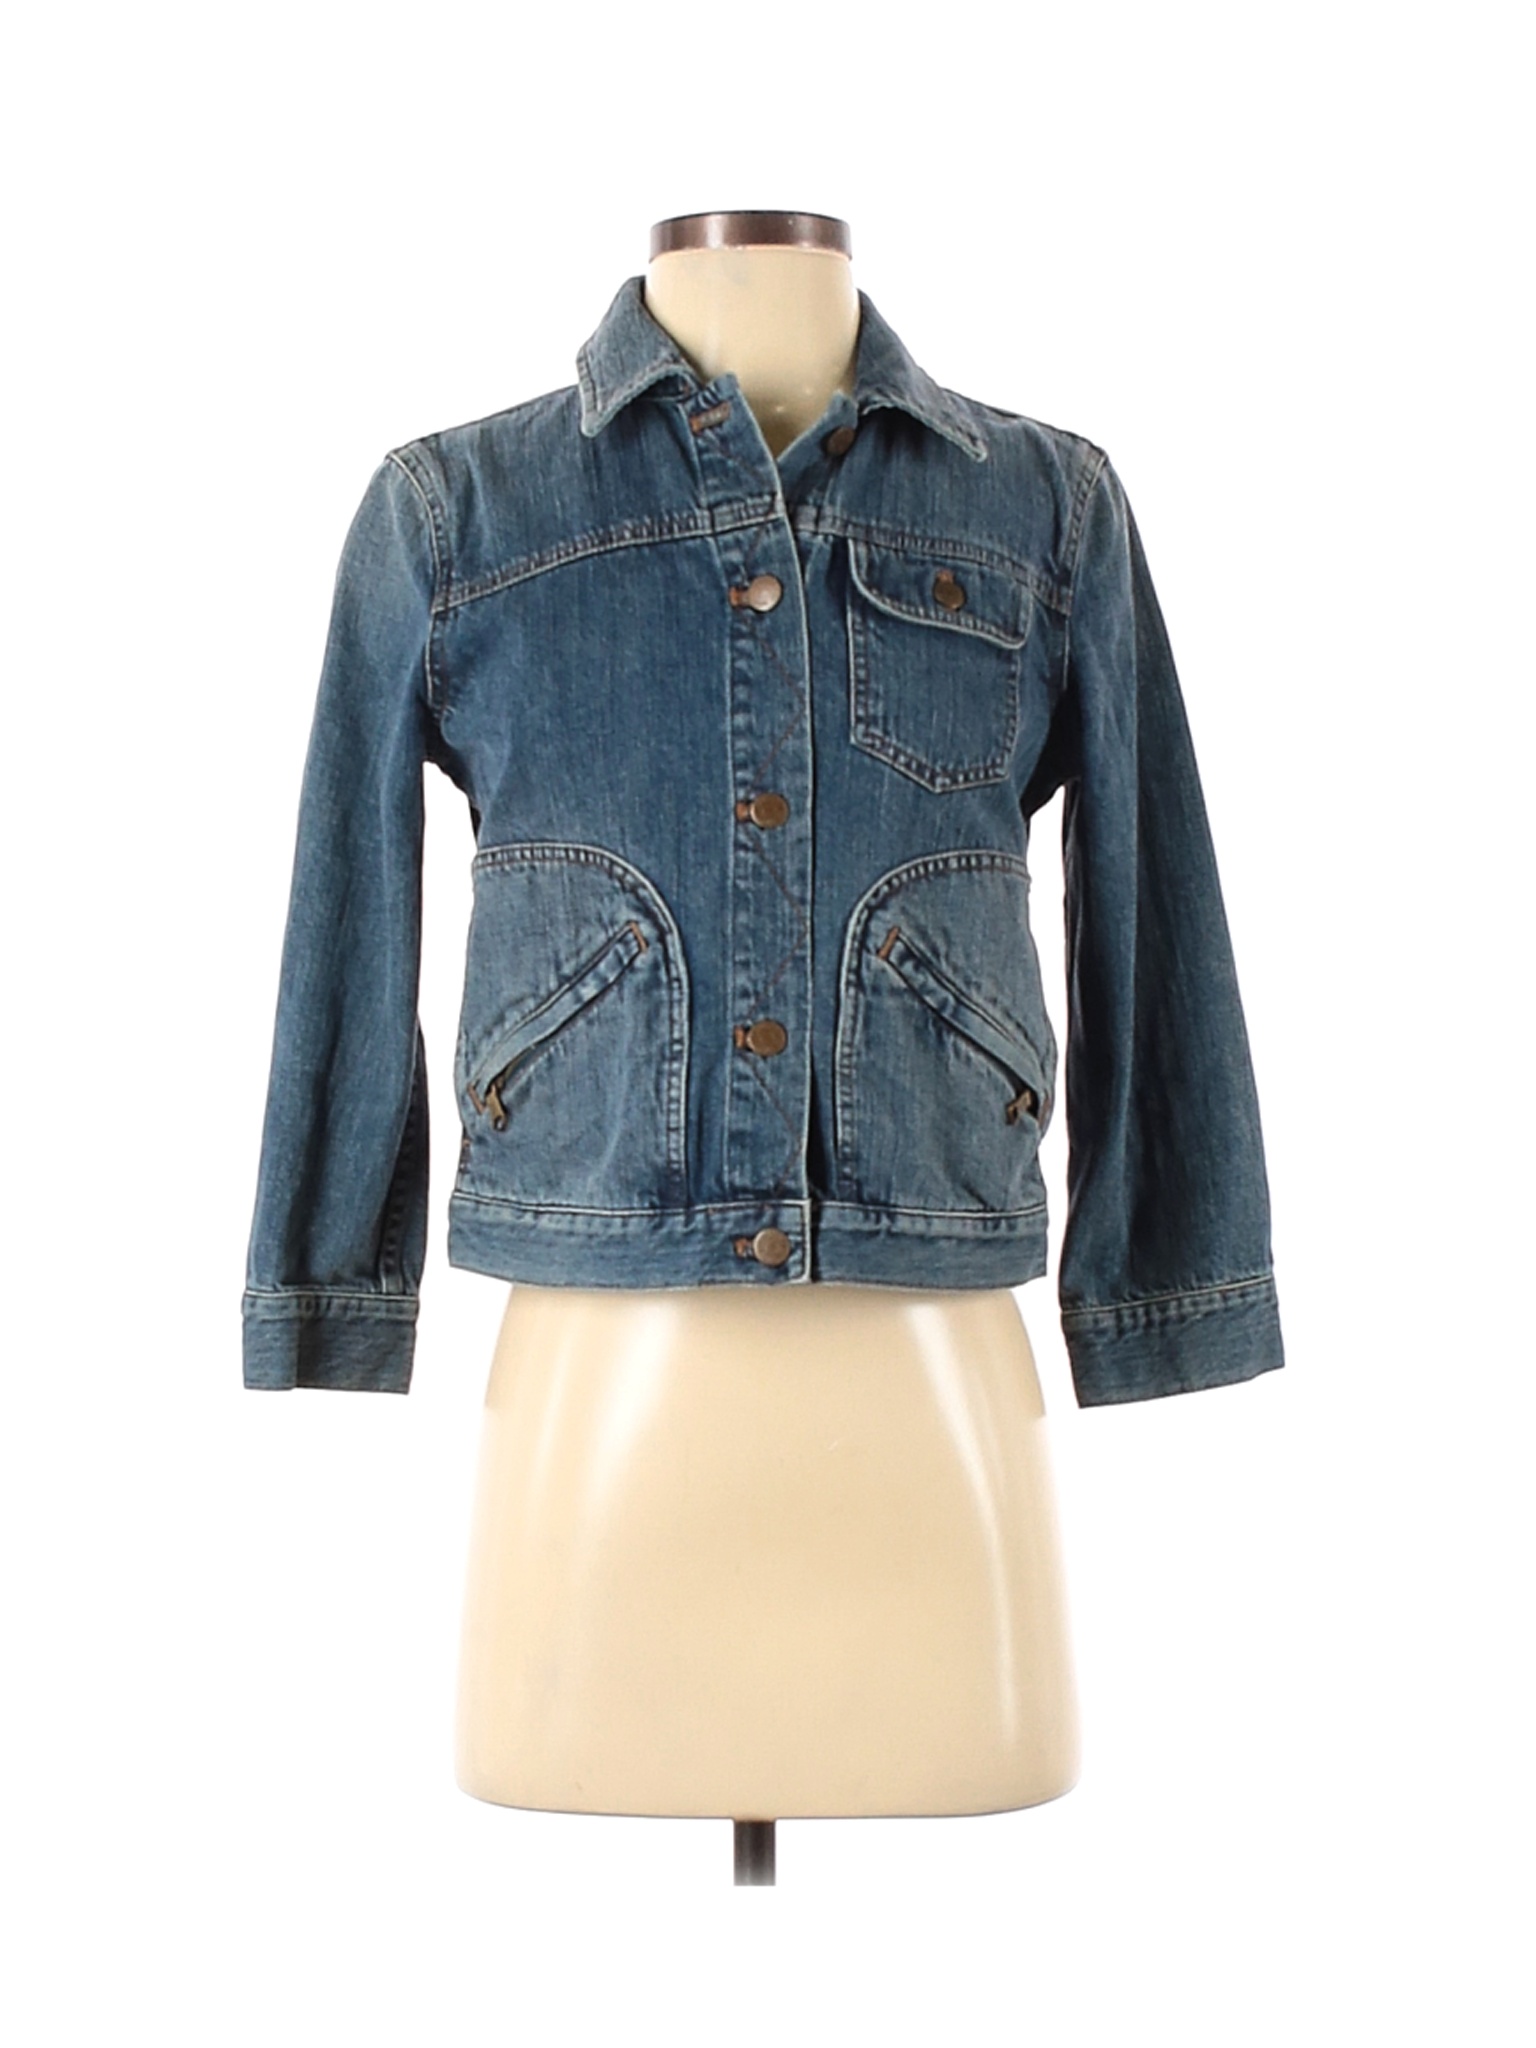 Lauren Jeans Co. Women Blue Denim Jacket S Petites | eBay